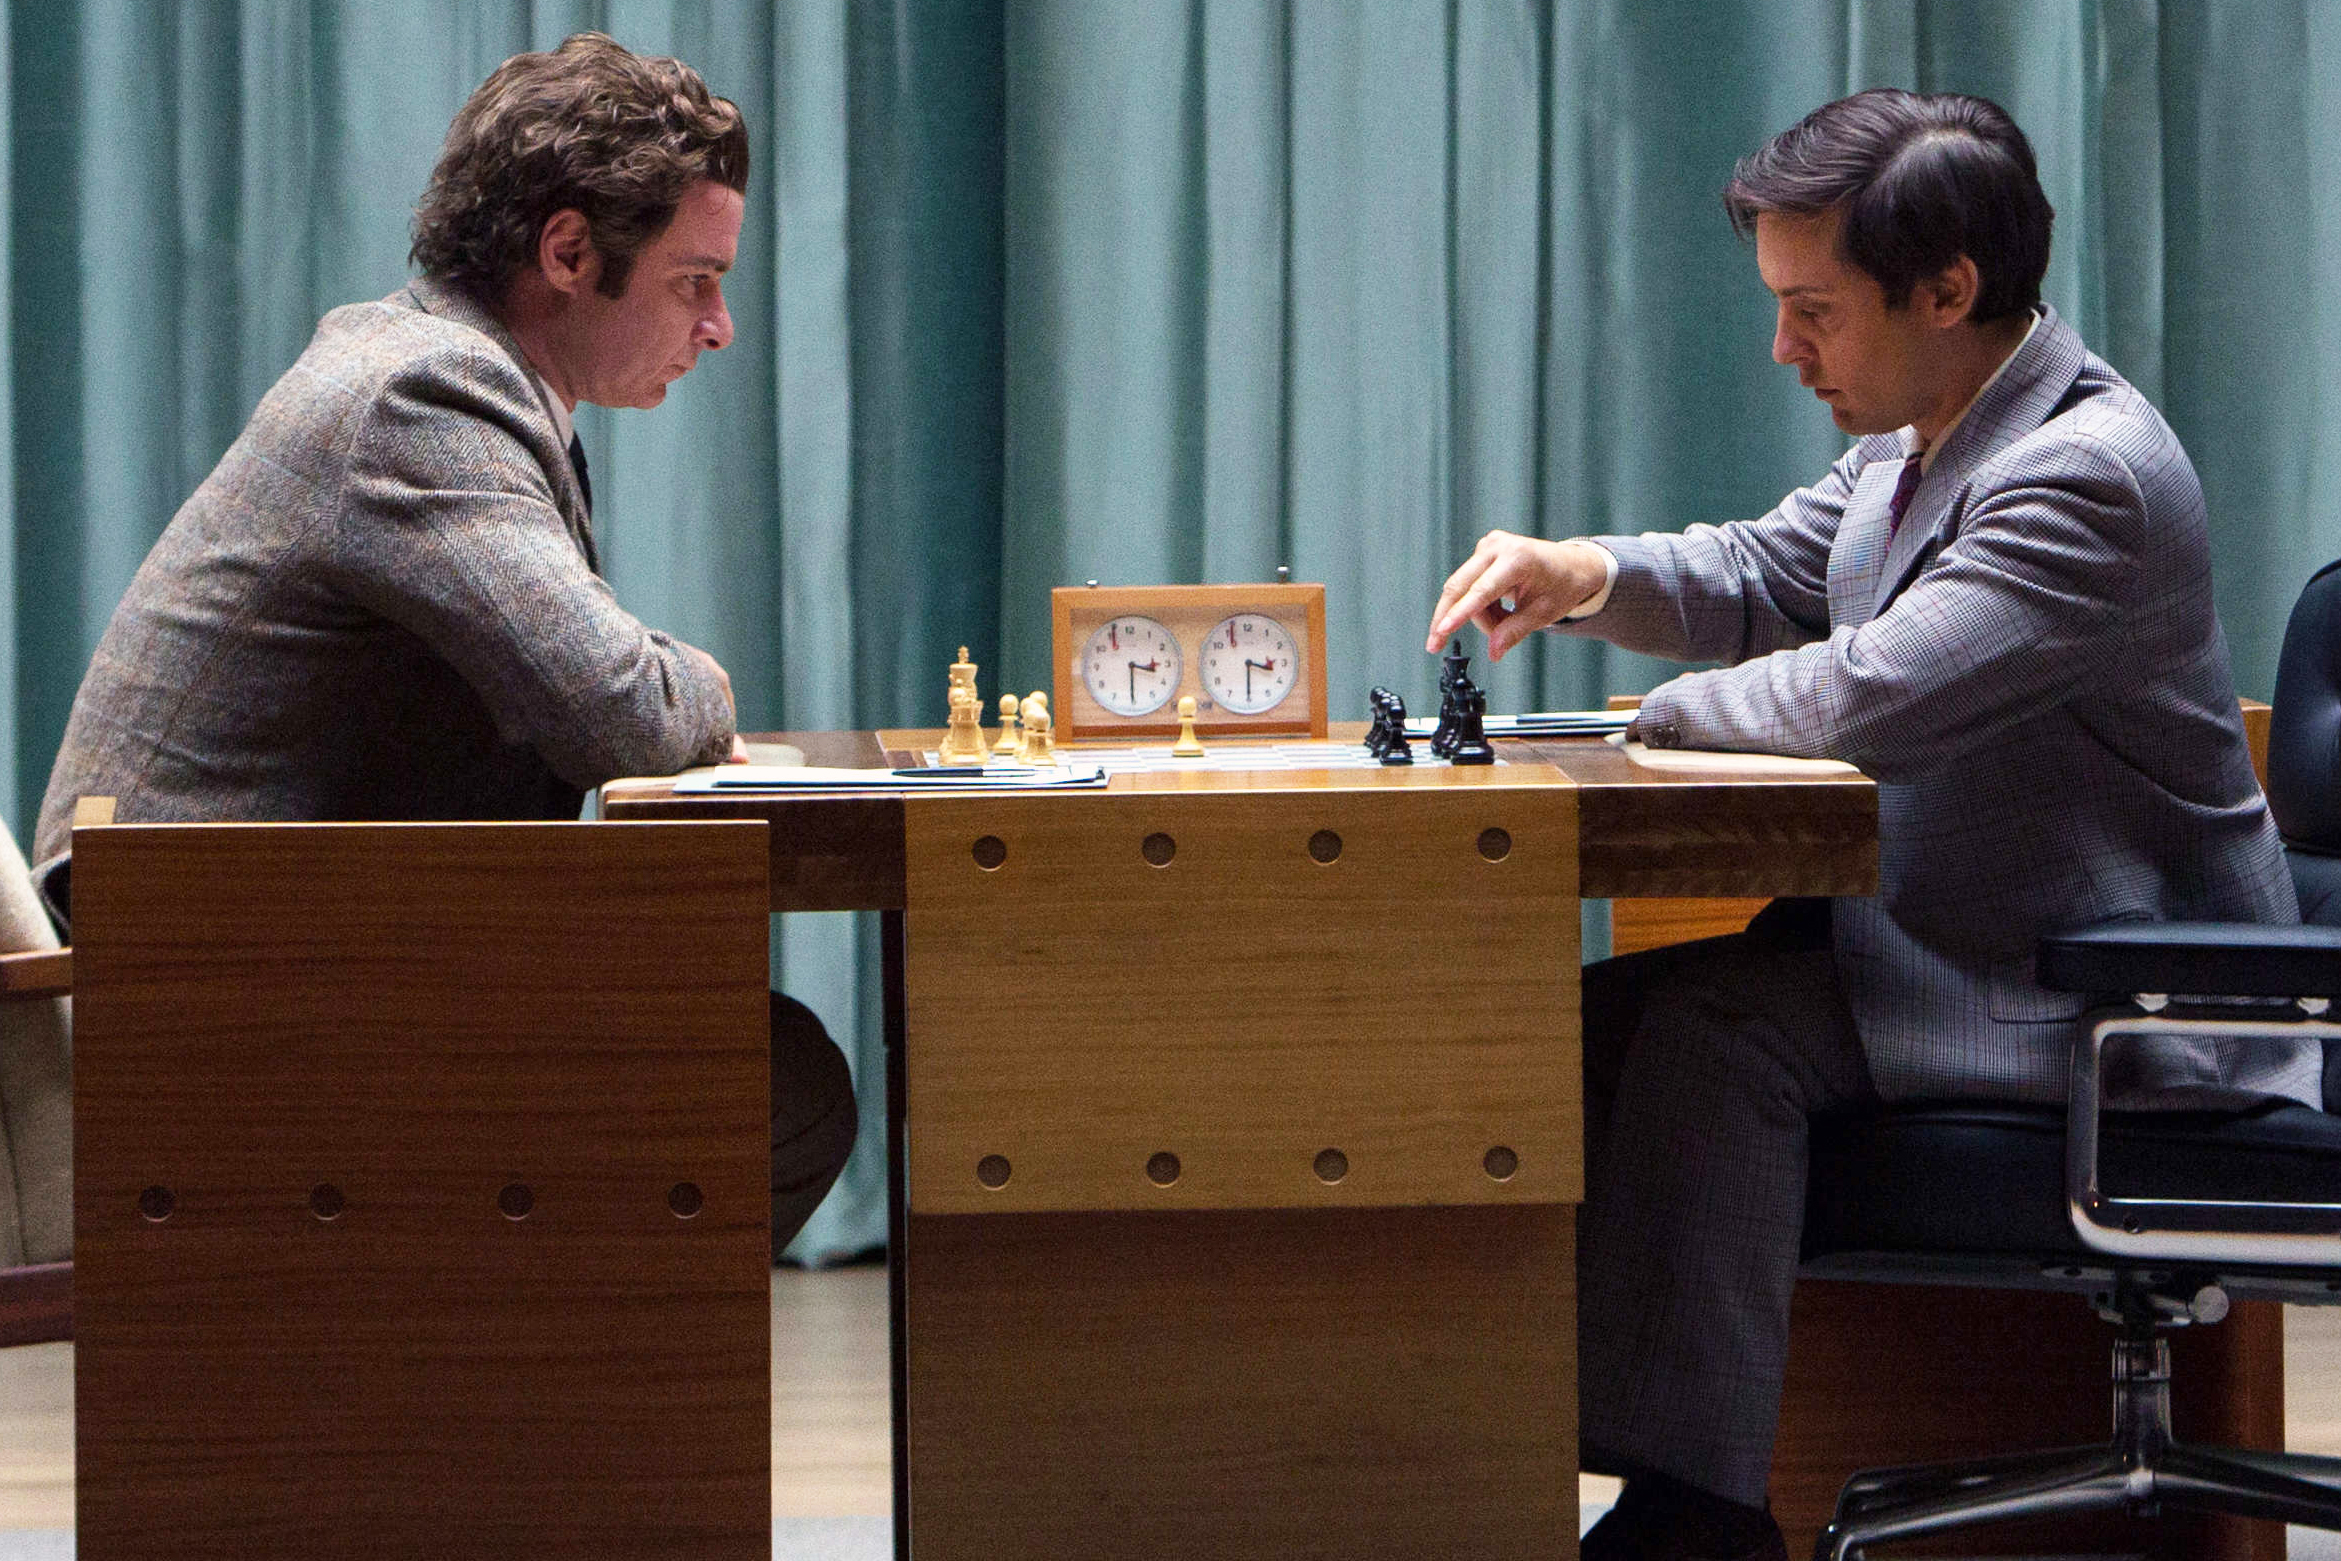 Pawn Sacrifice vs True Story of Bobby Fischer and Boris Spassky